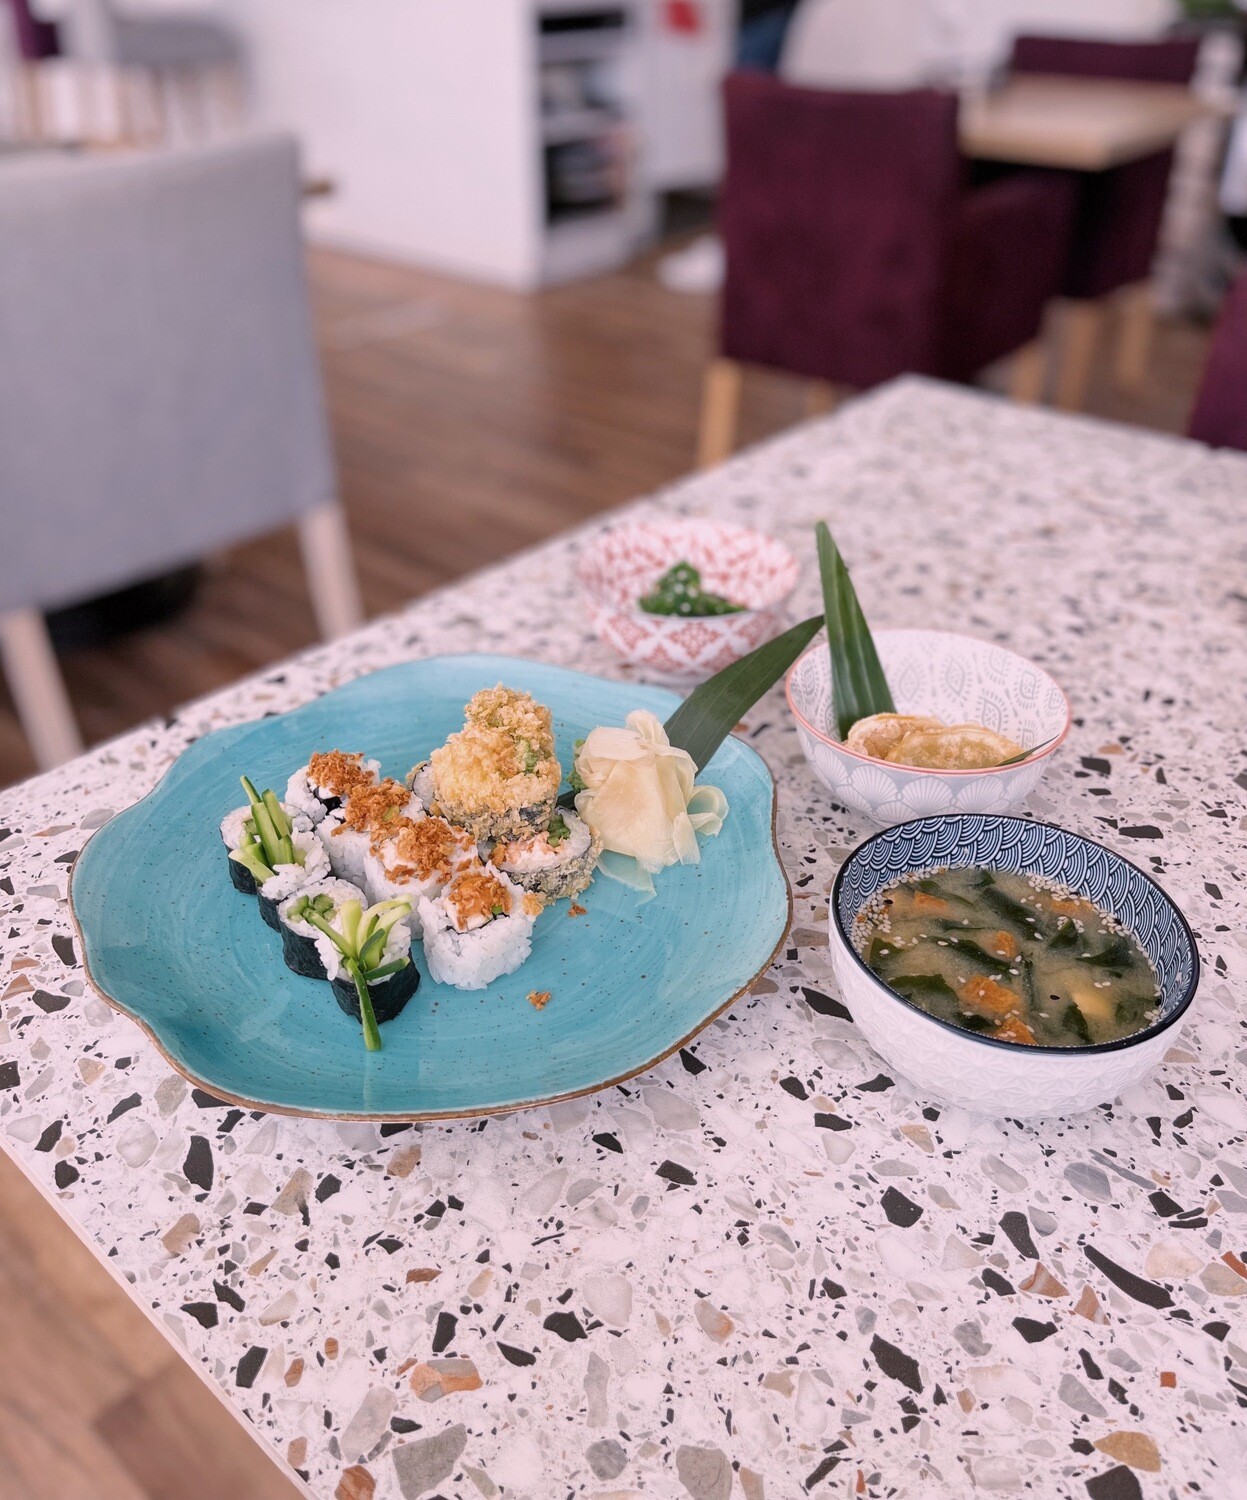 BESTSELLER LUNCH 11 szt. sushi + zupa miso tofu